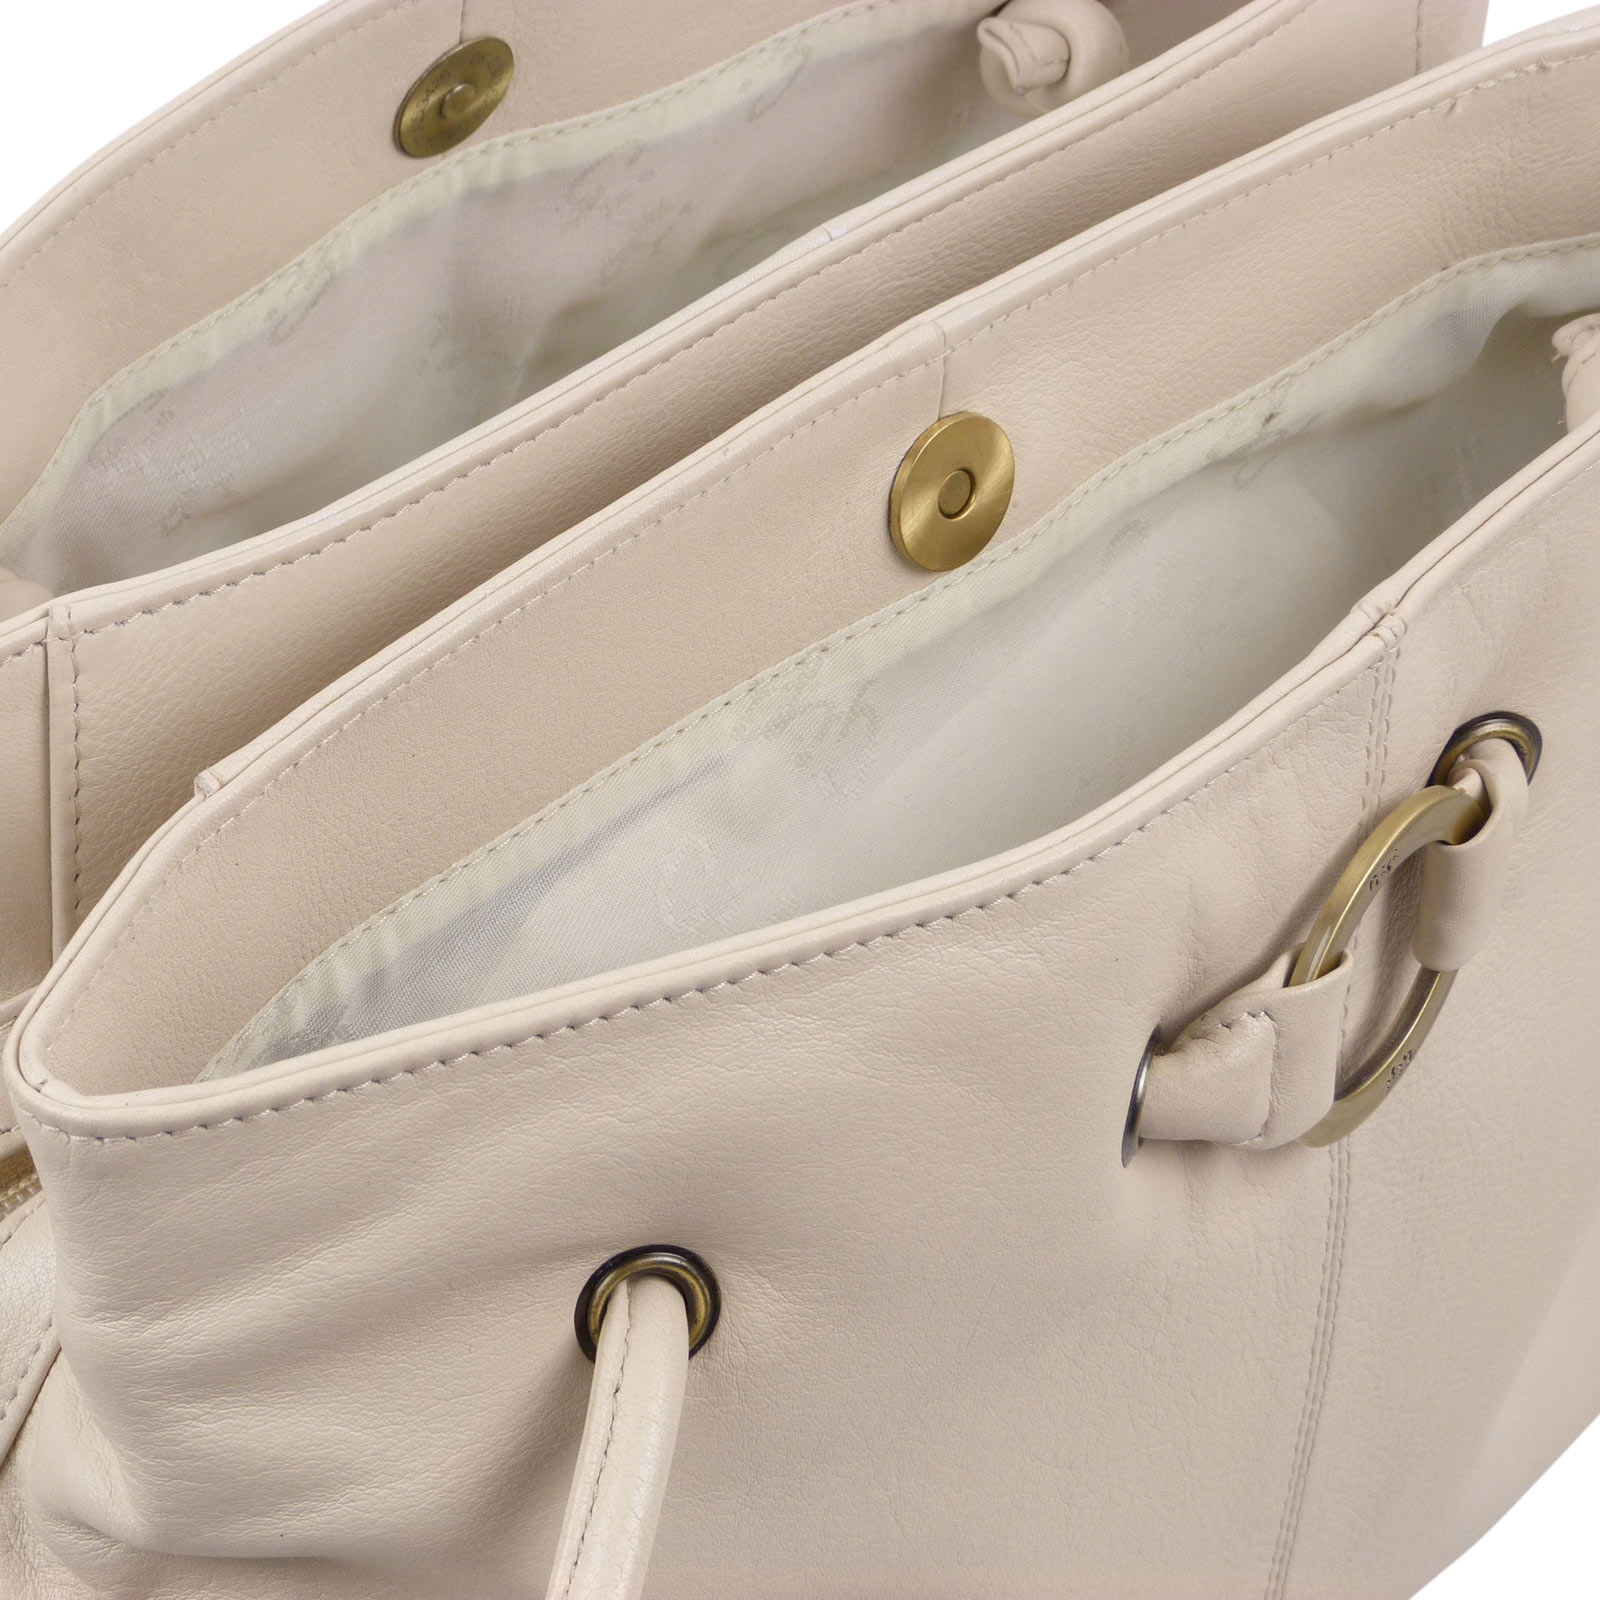 Ladies Classic Leather Versatile Shoulder Handbag by GiGi Stylish | eBay